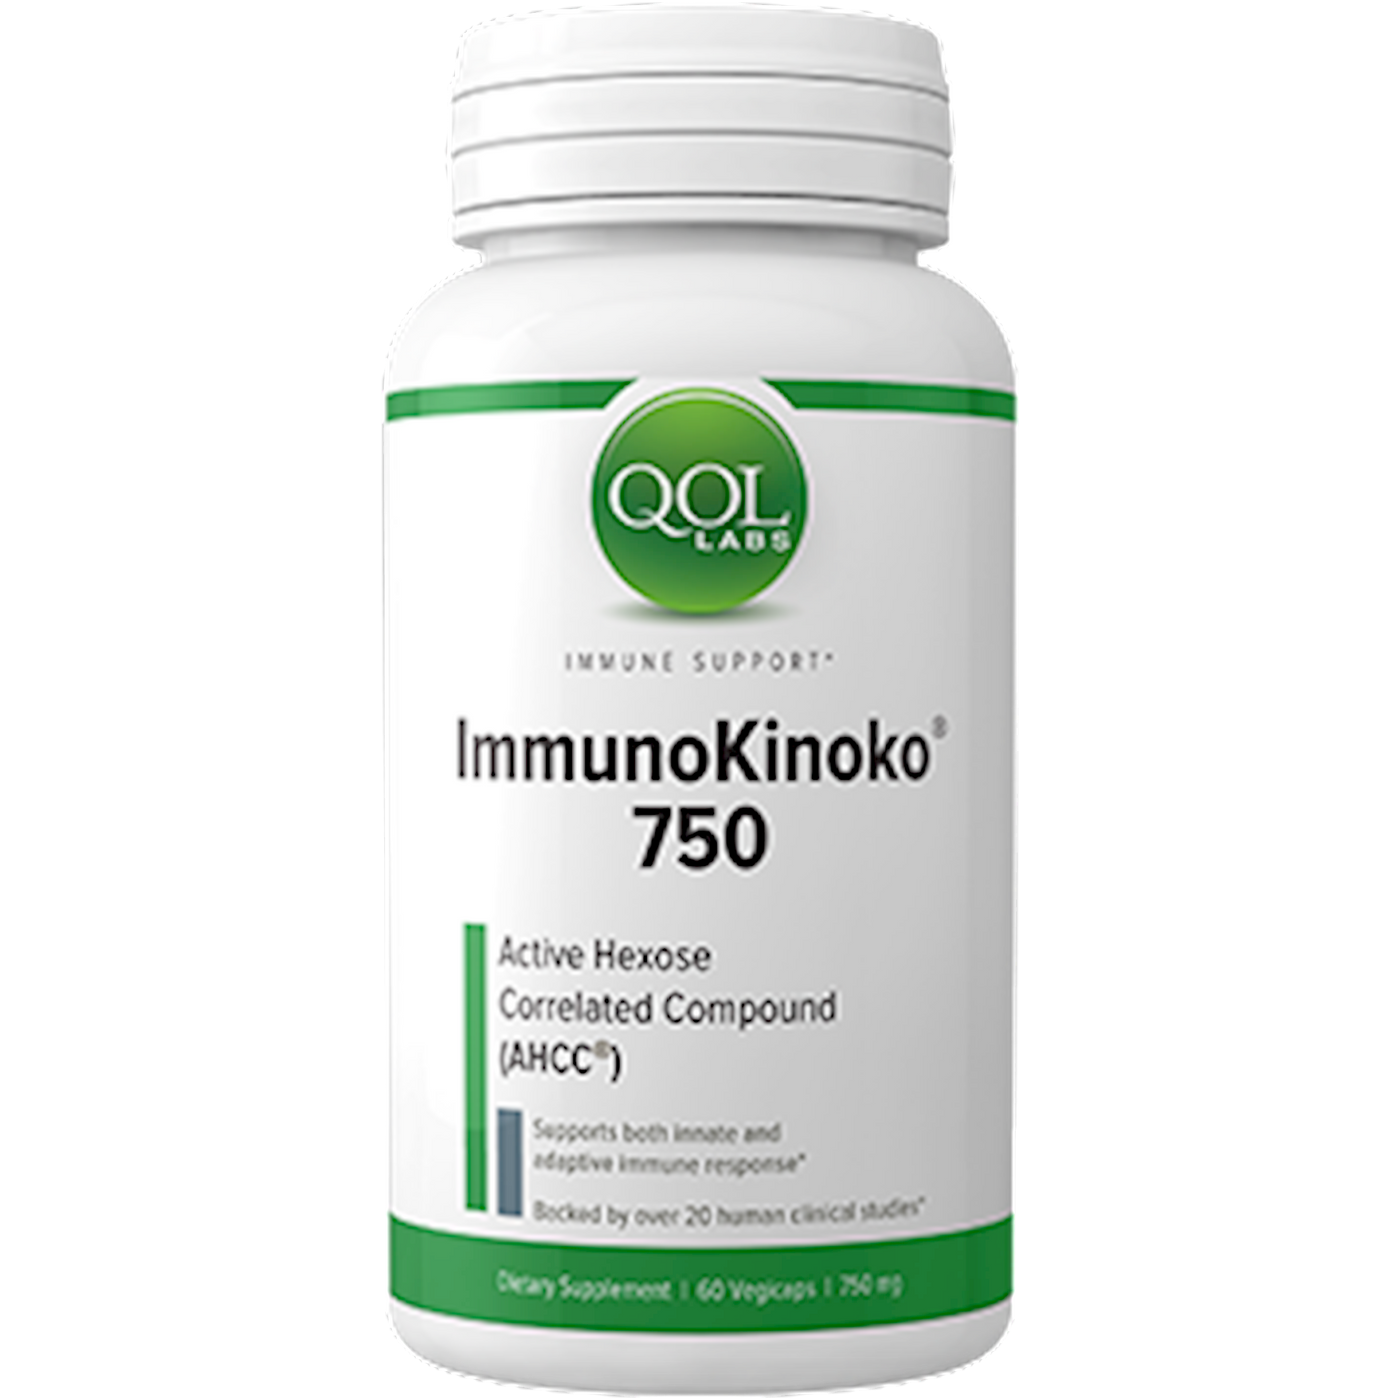 ImmunoKinoko 750 mg 60 vcaps Curated Wellness